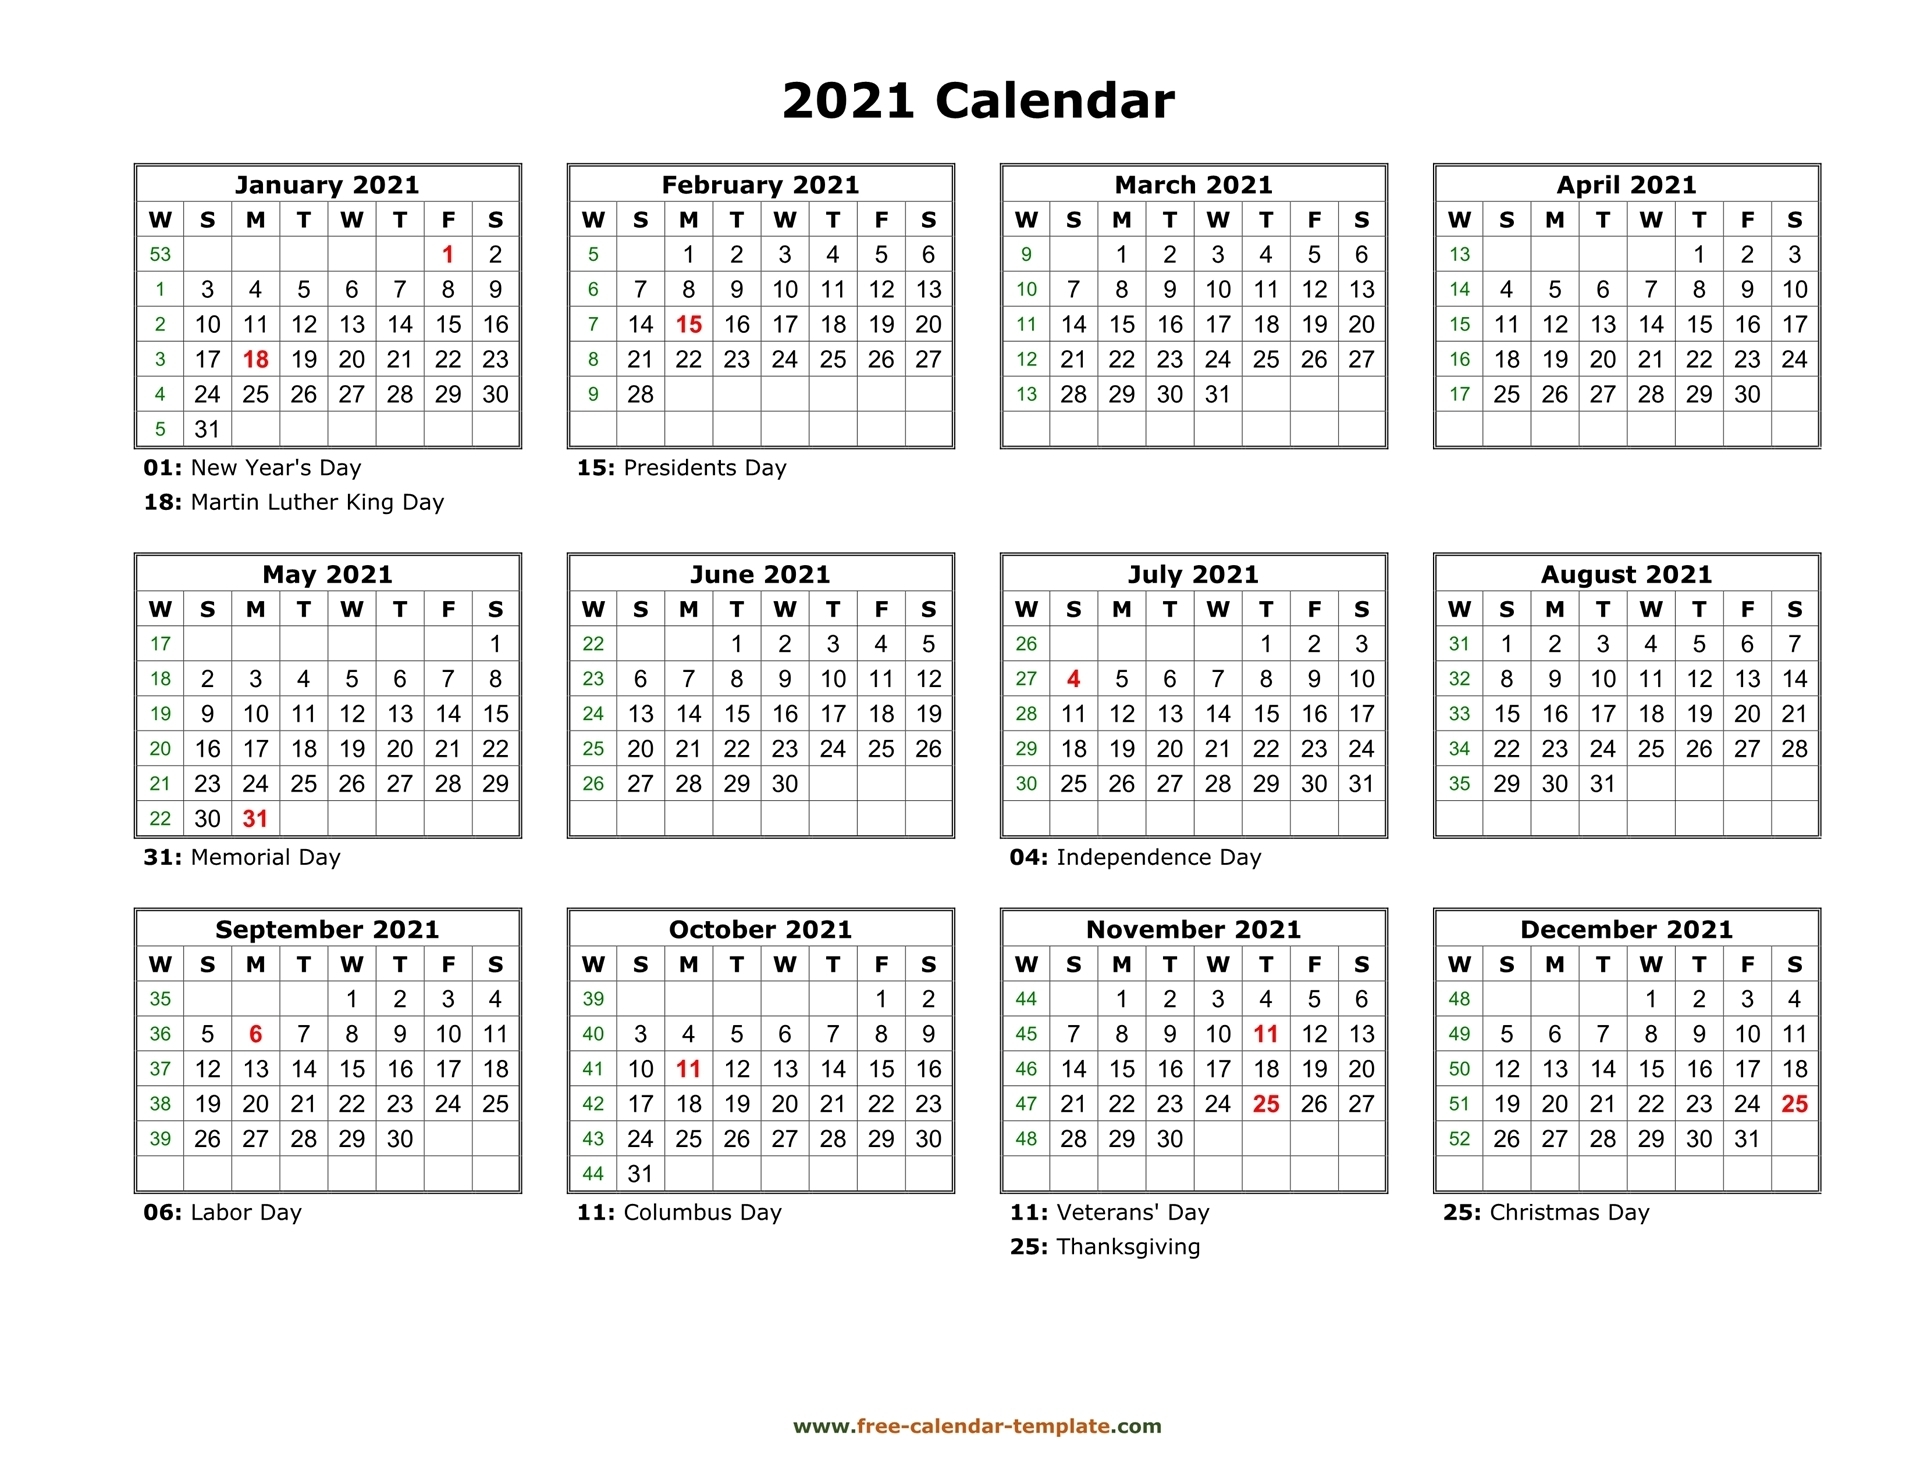 Printable Yearly Calendar 2021 | Free-Calendar-Template